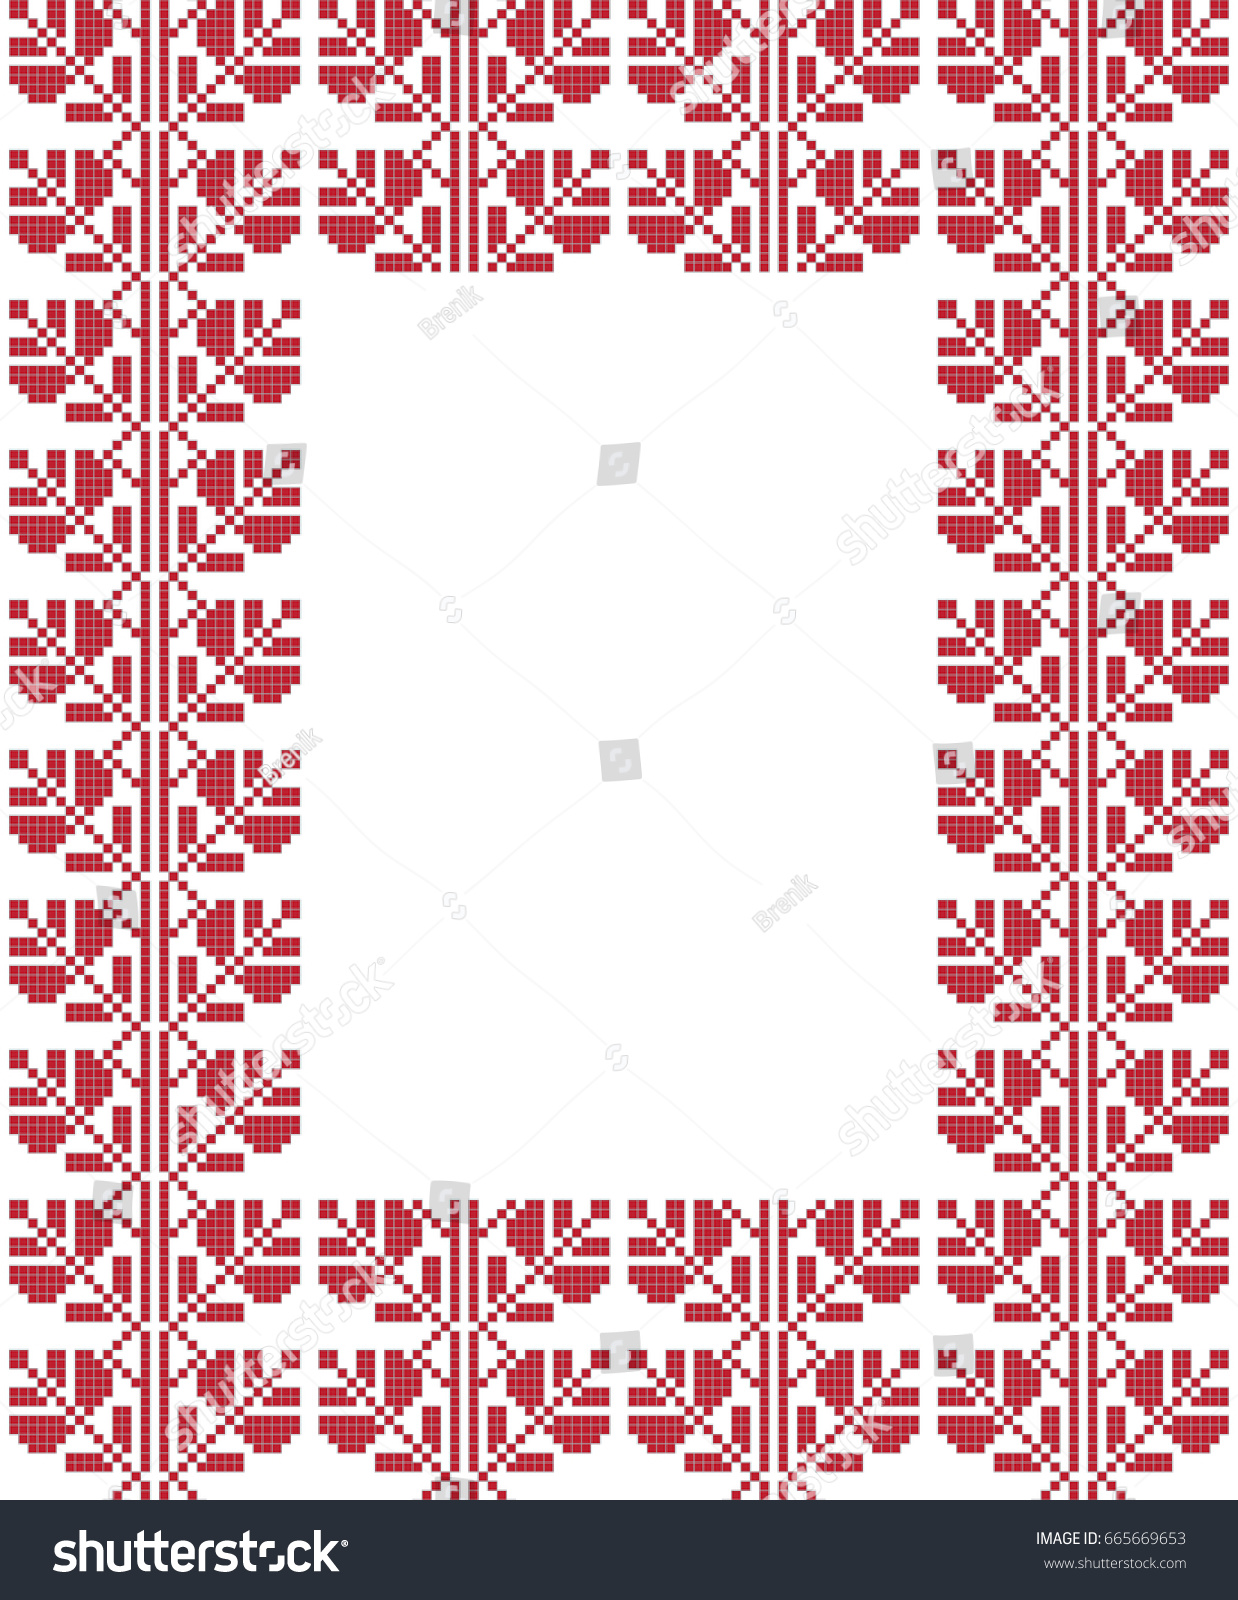 SVG of Traditional Moldavian folk art knitted embroidery pattern.  svg